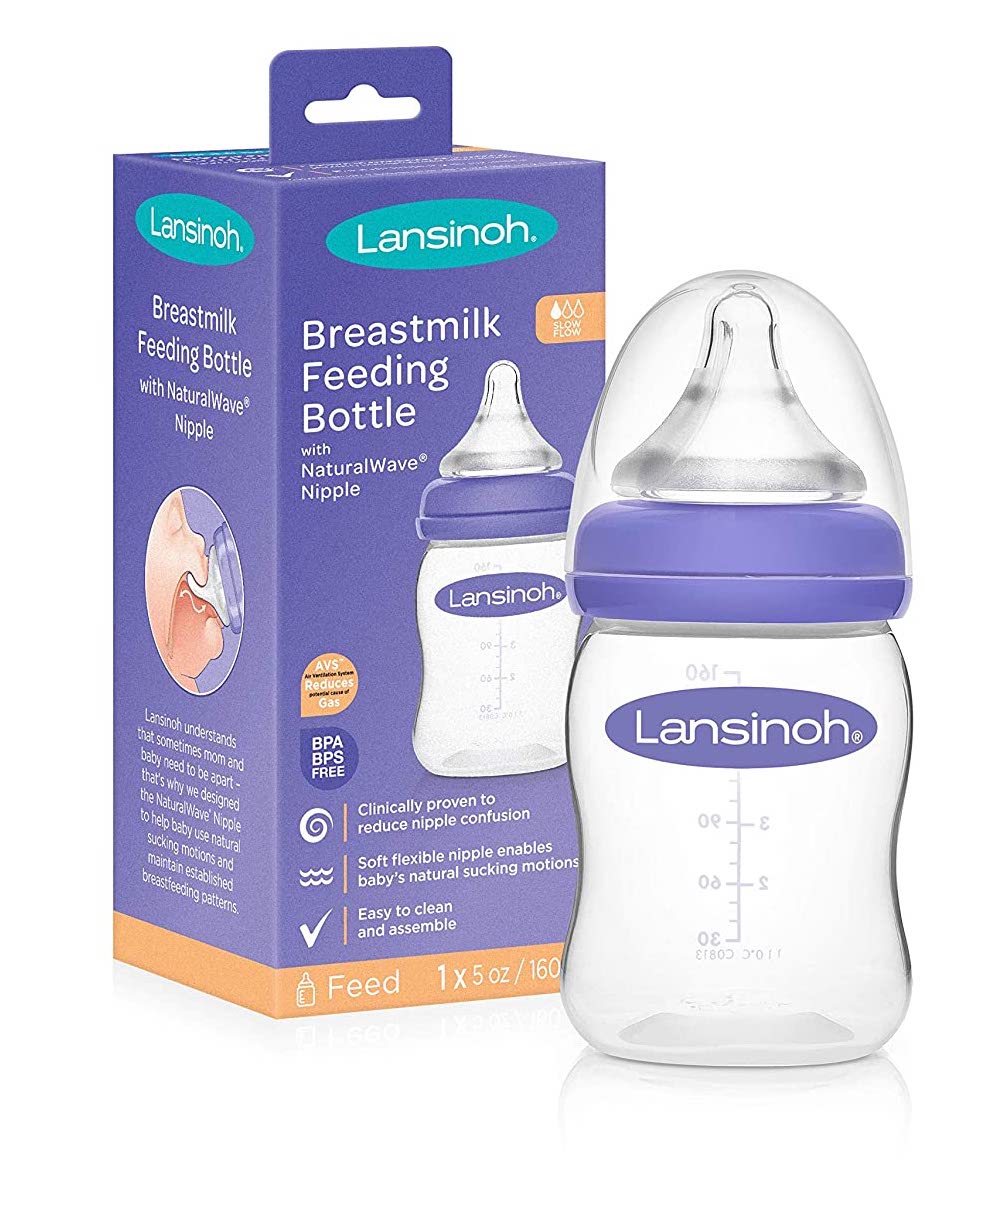 https://jinxykids.com/wp-content/uploads/2012/04/Lansinoh-Momma-Breastmilk-Feeding-Bottle-with-NaturalWave-Slow-Flow-Nipple.jpg